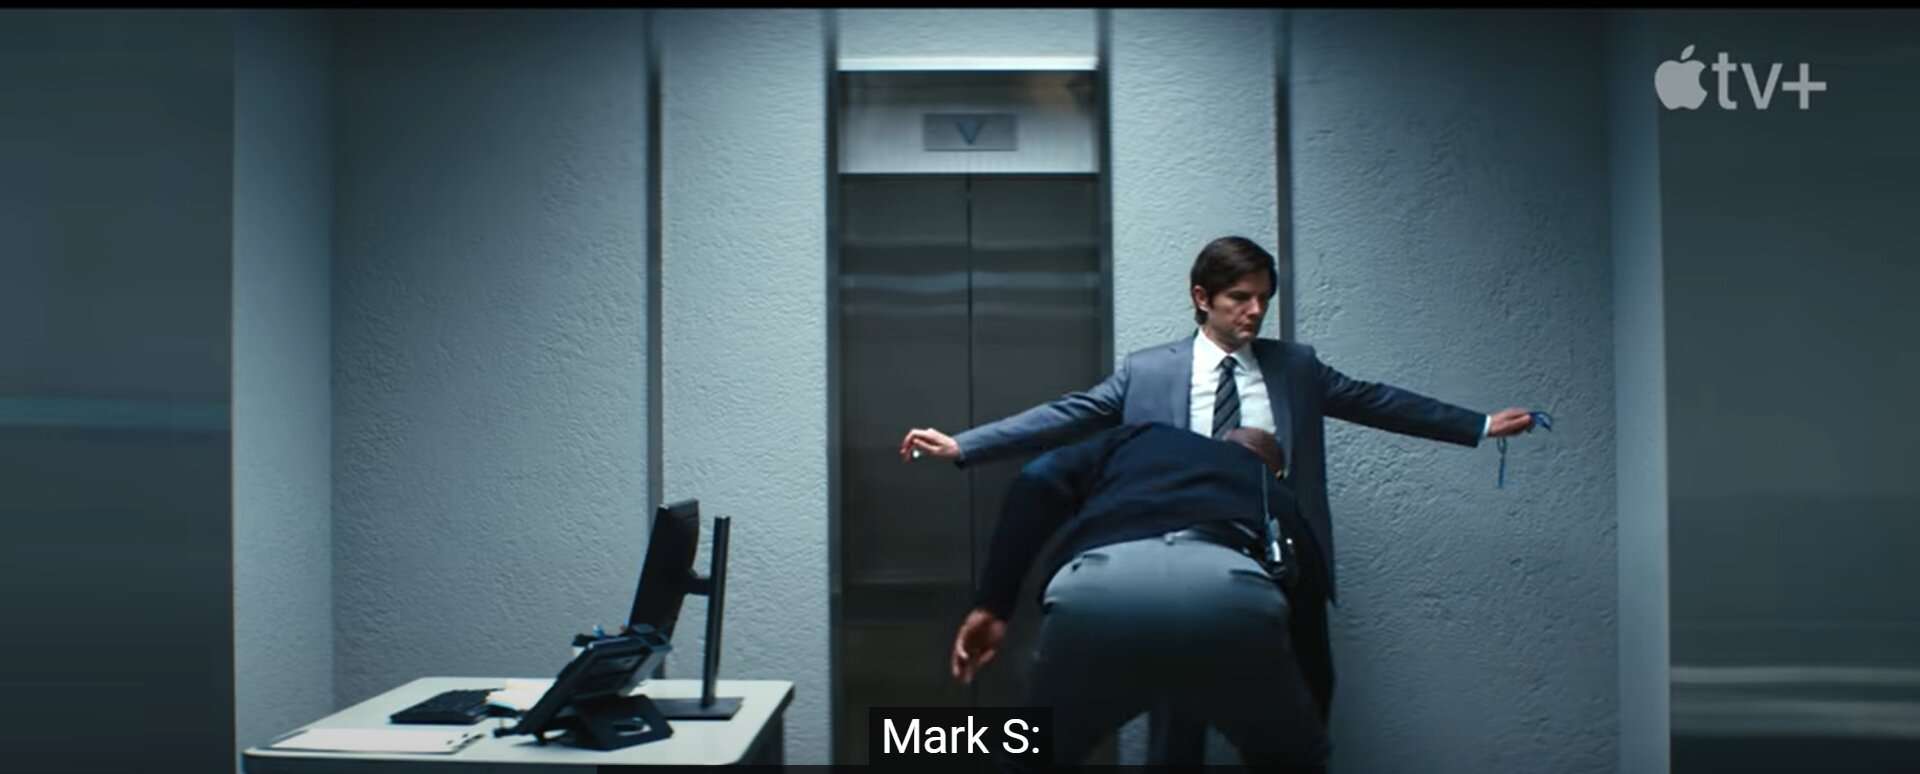 Mark entering the Severance Office.